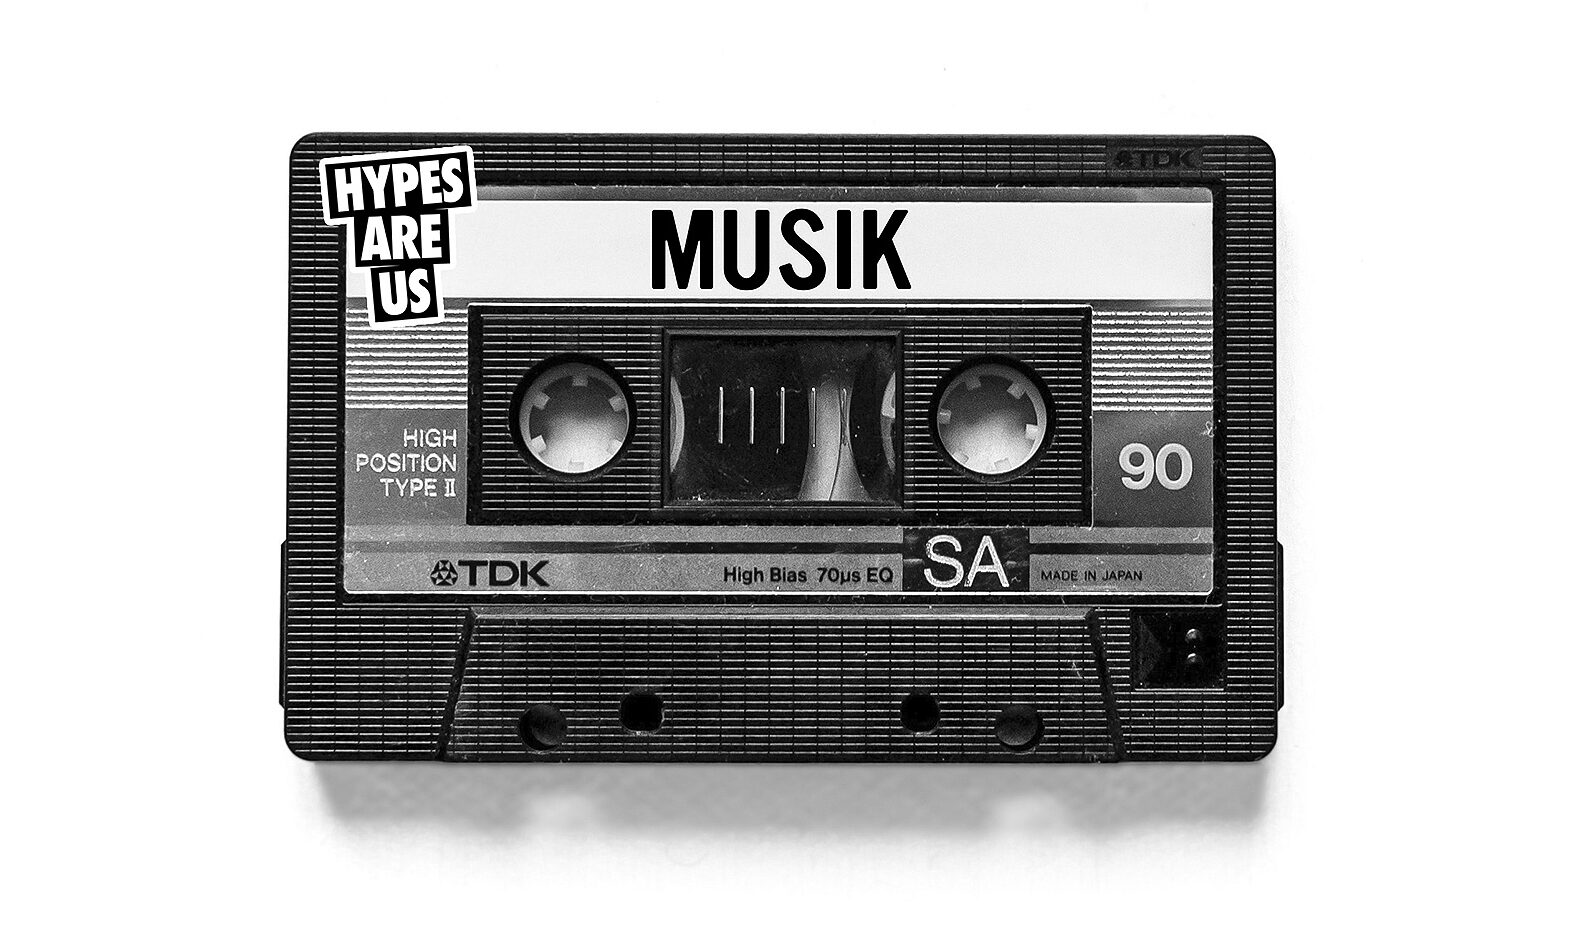 Musik Drake Music hypes are us hypesrus.com